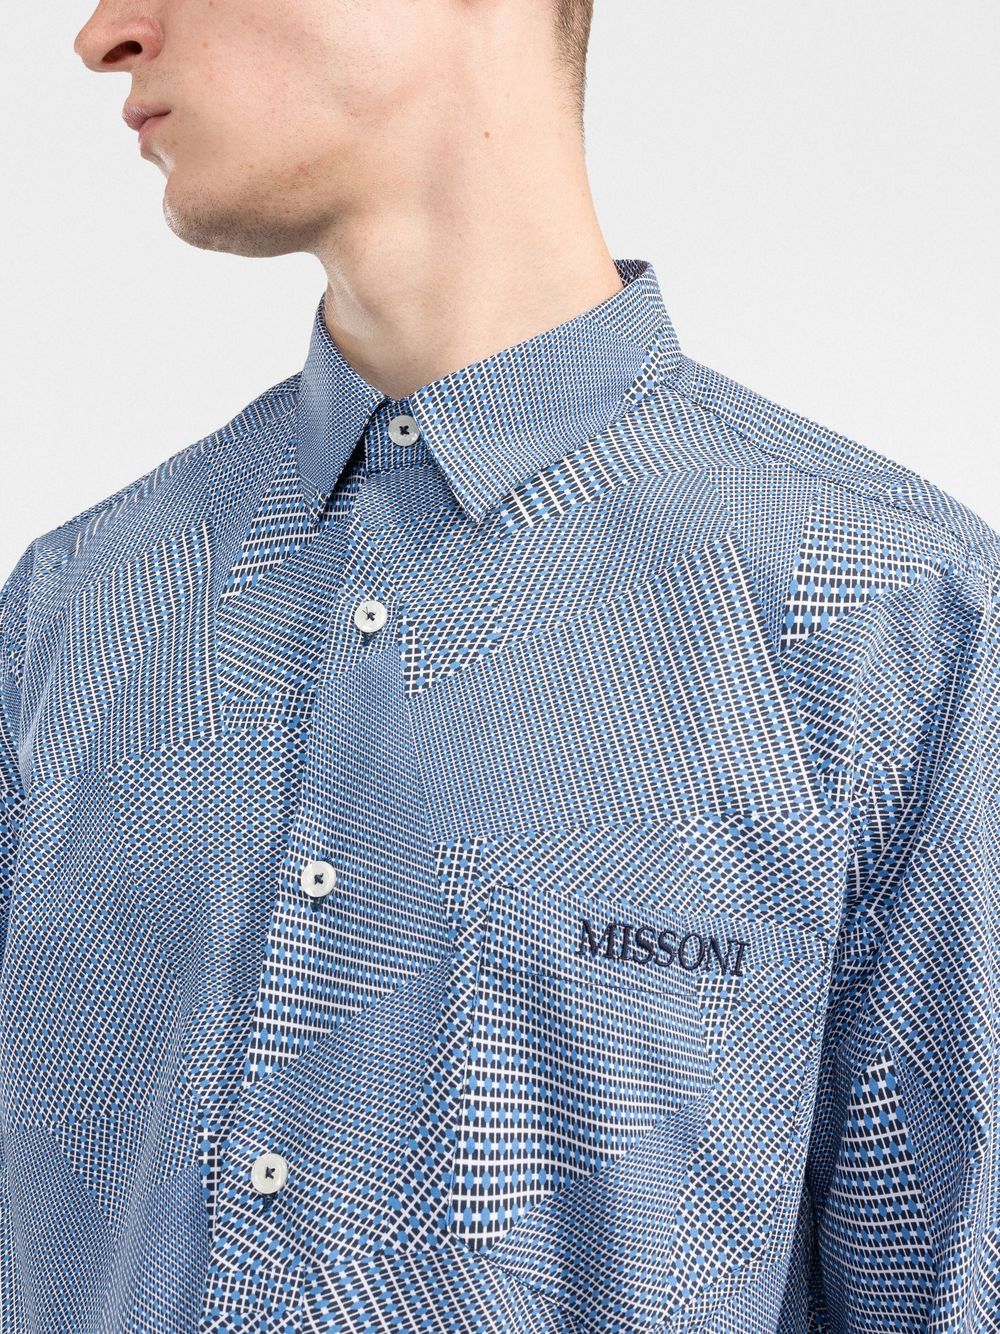 Missoni abstract-print Cotton Shirt - Farfetch